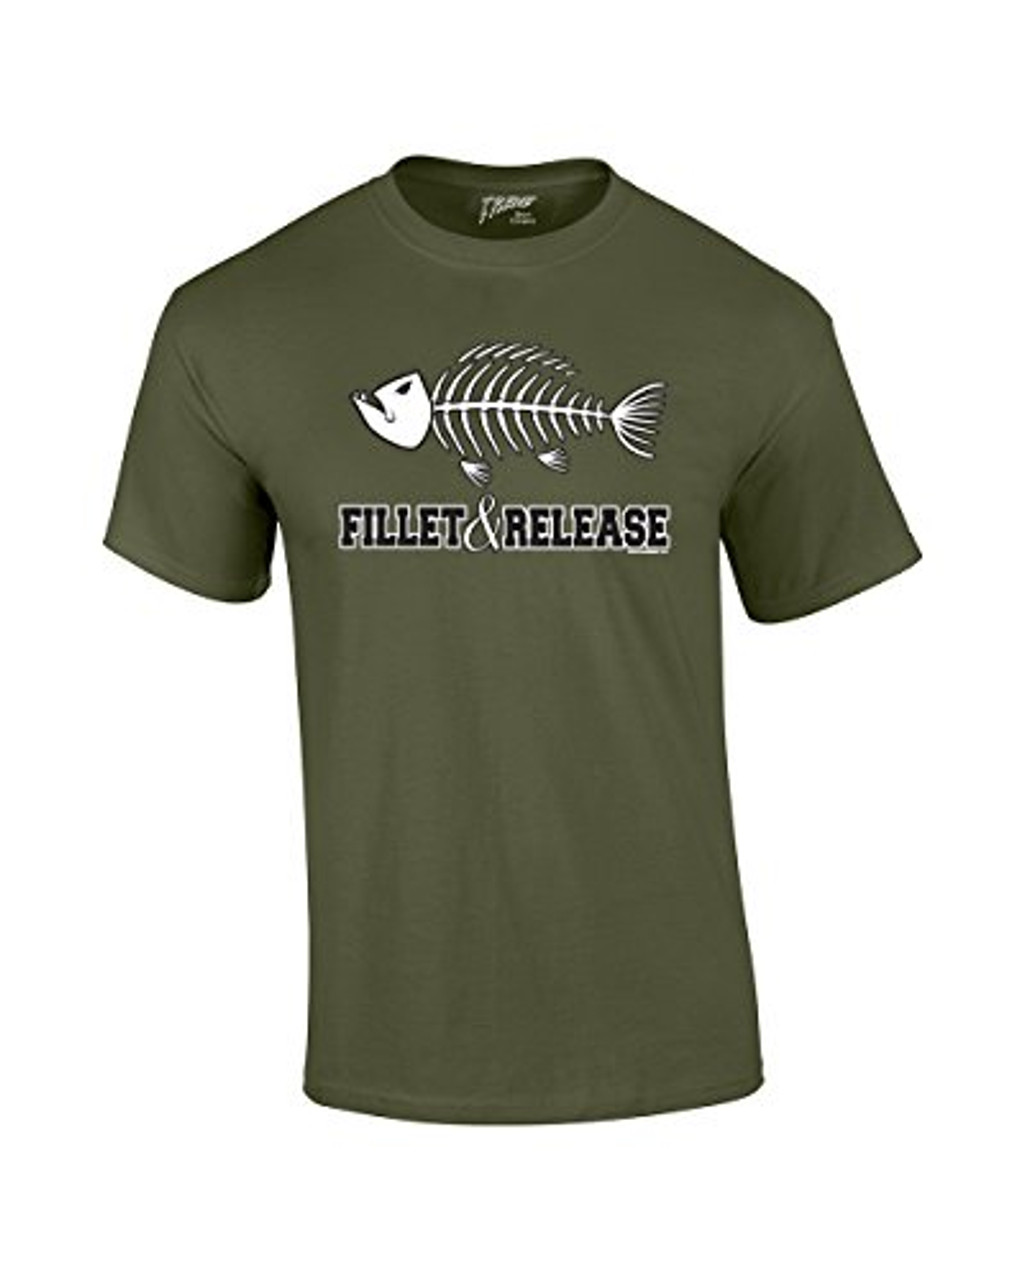 Eat Sleep Fish Repeat T-shirt Fishing Shirt Fisherman Gift Funny Fishing  Tshirt Fly Fishing T Shirt Bass Fishing 